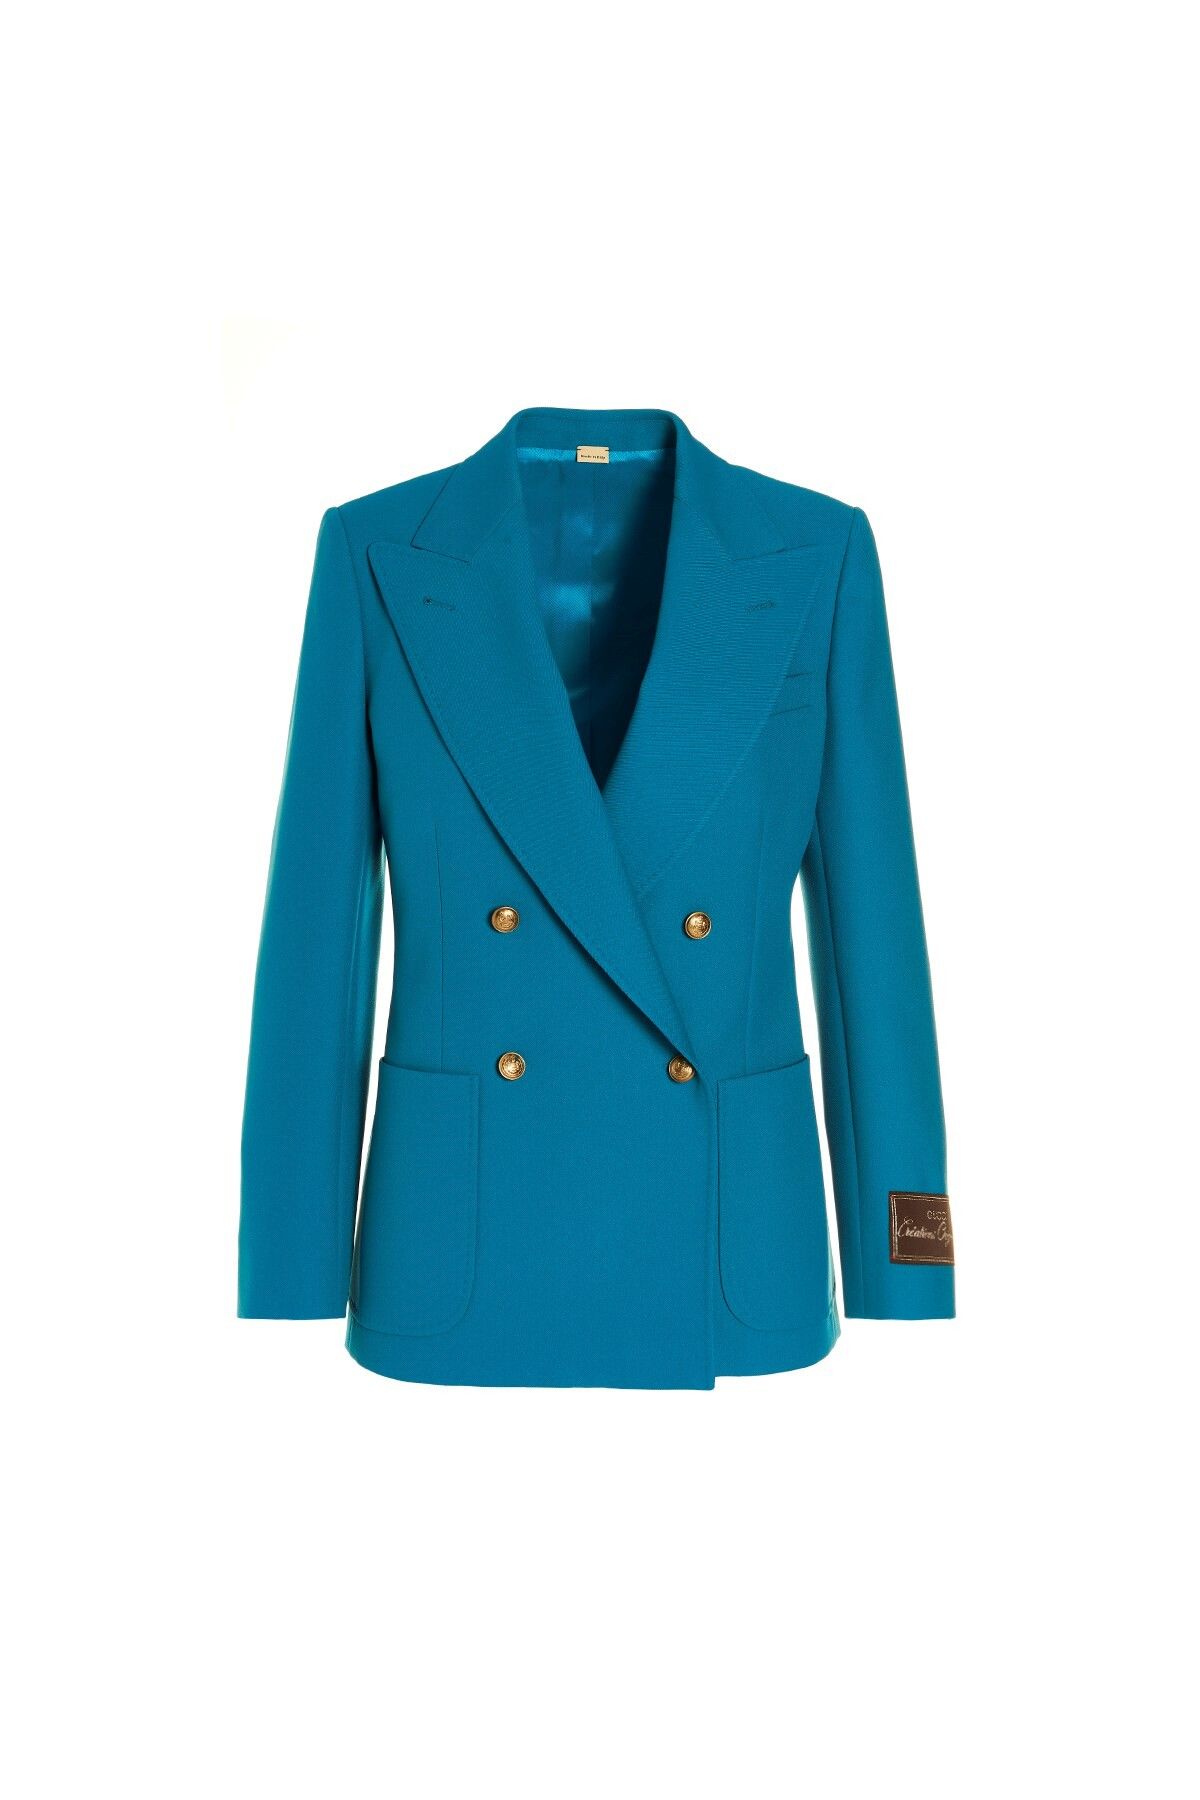 Gucci Double breast drill blazer jacket | Grailed